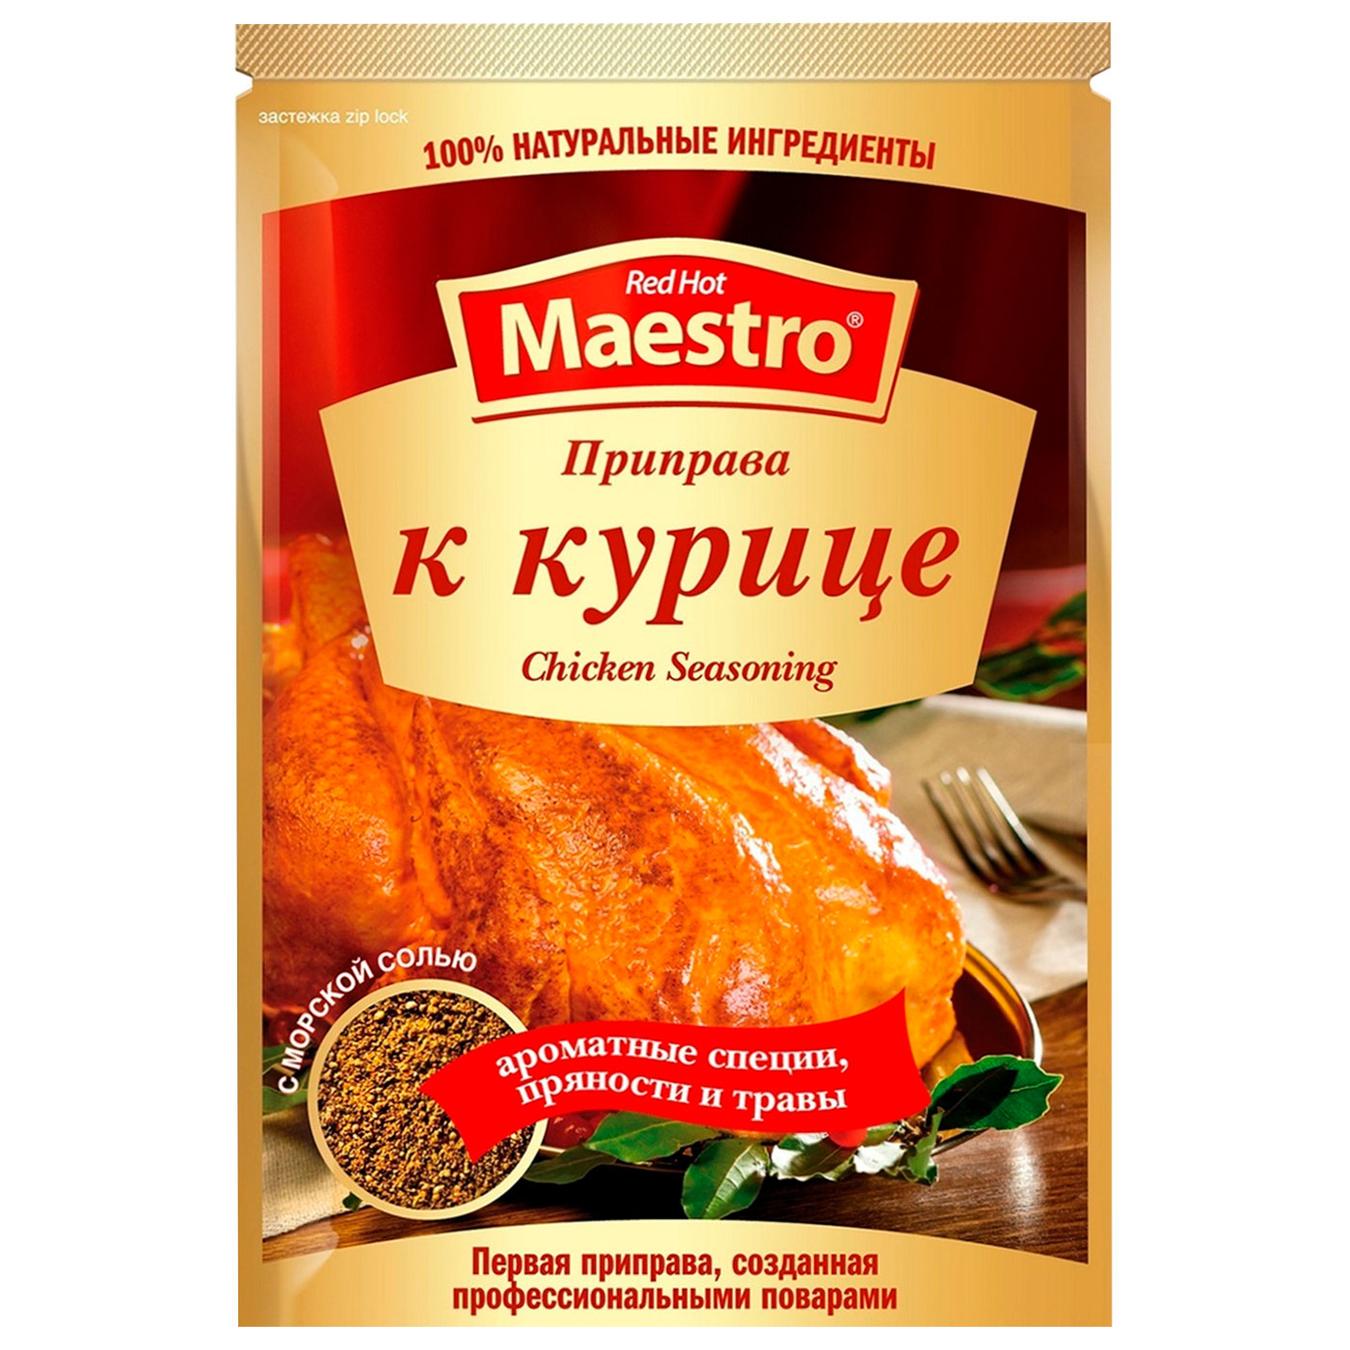 Red Hot Maestro Spice for Chicken 25g